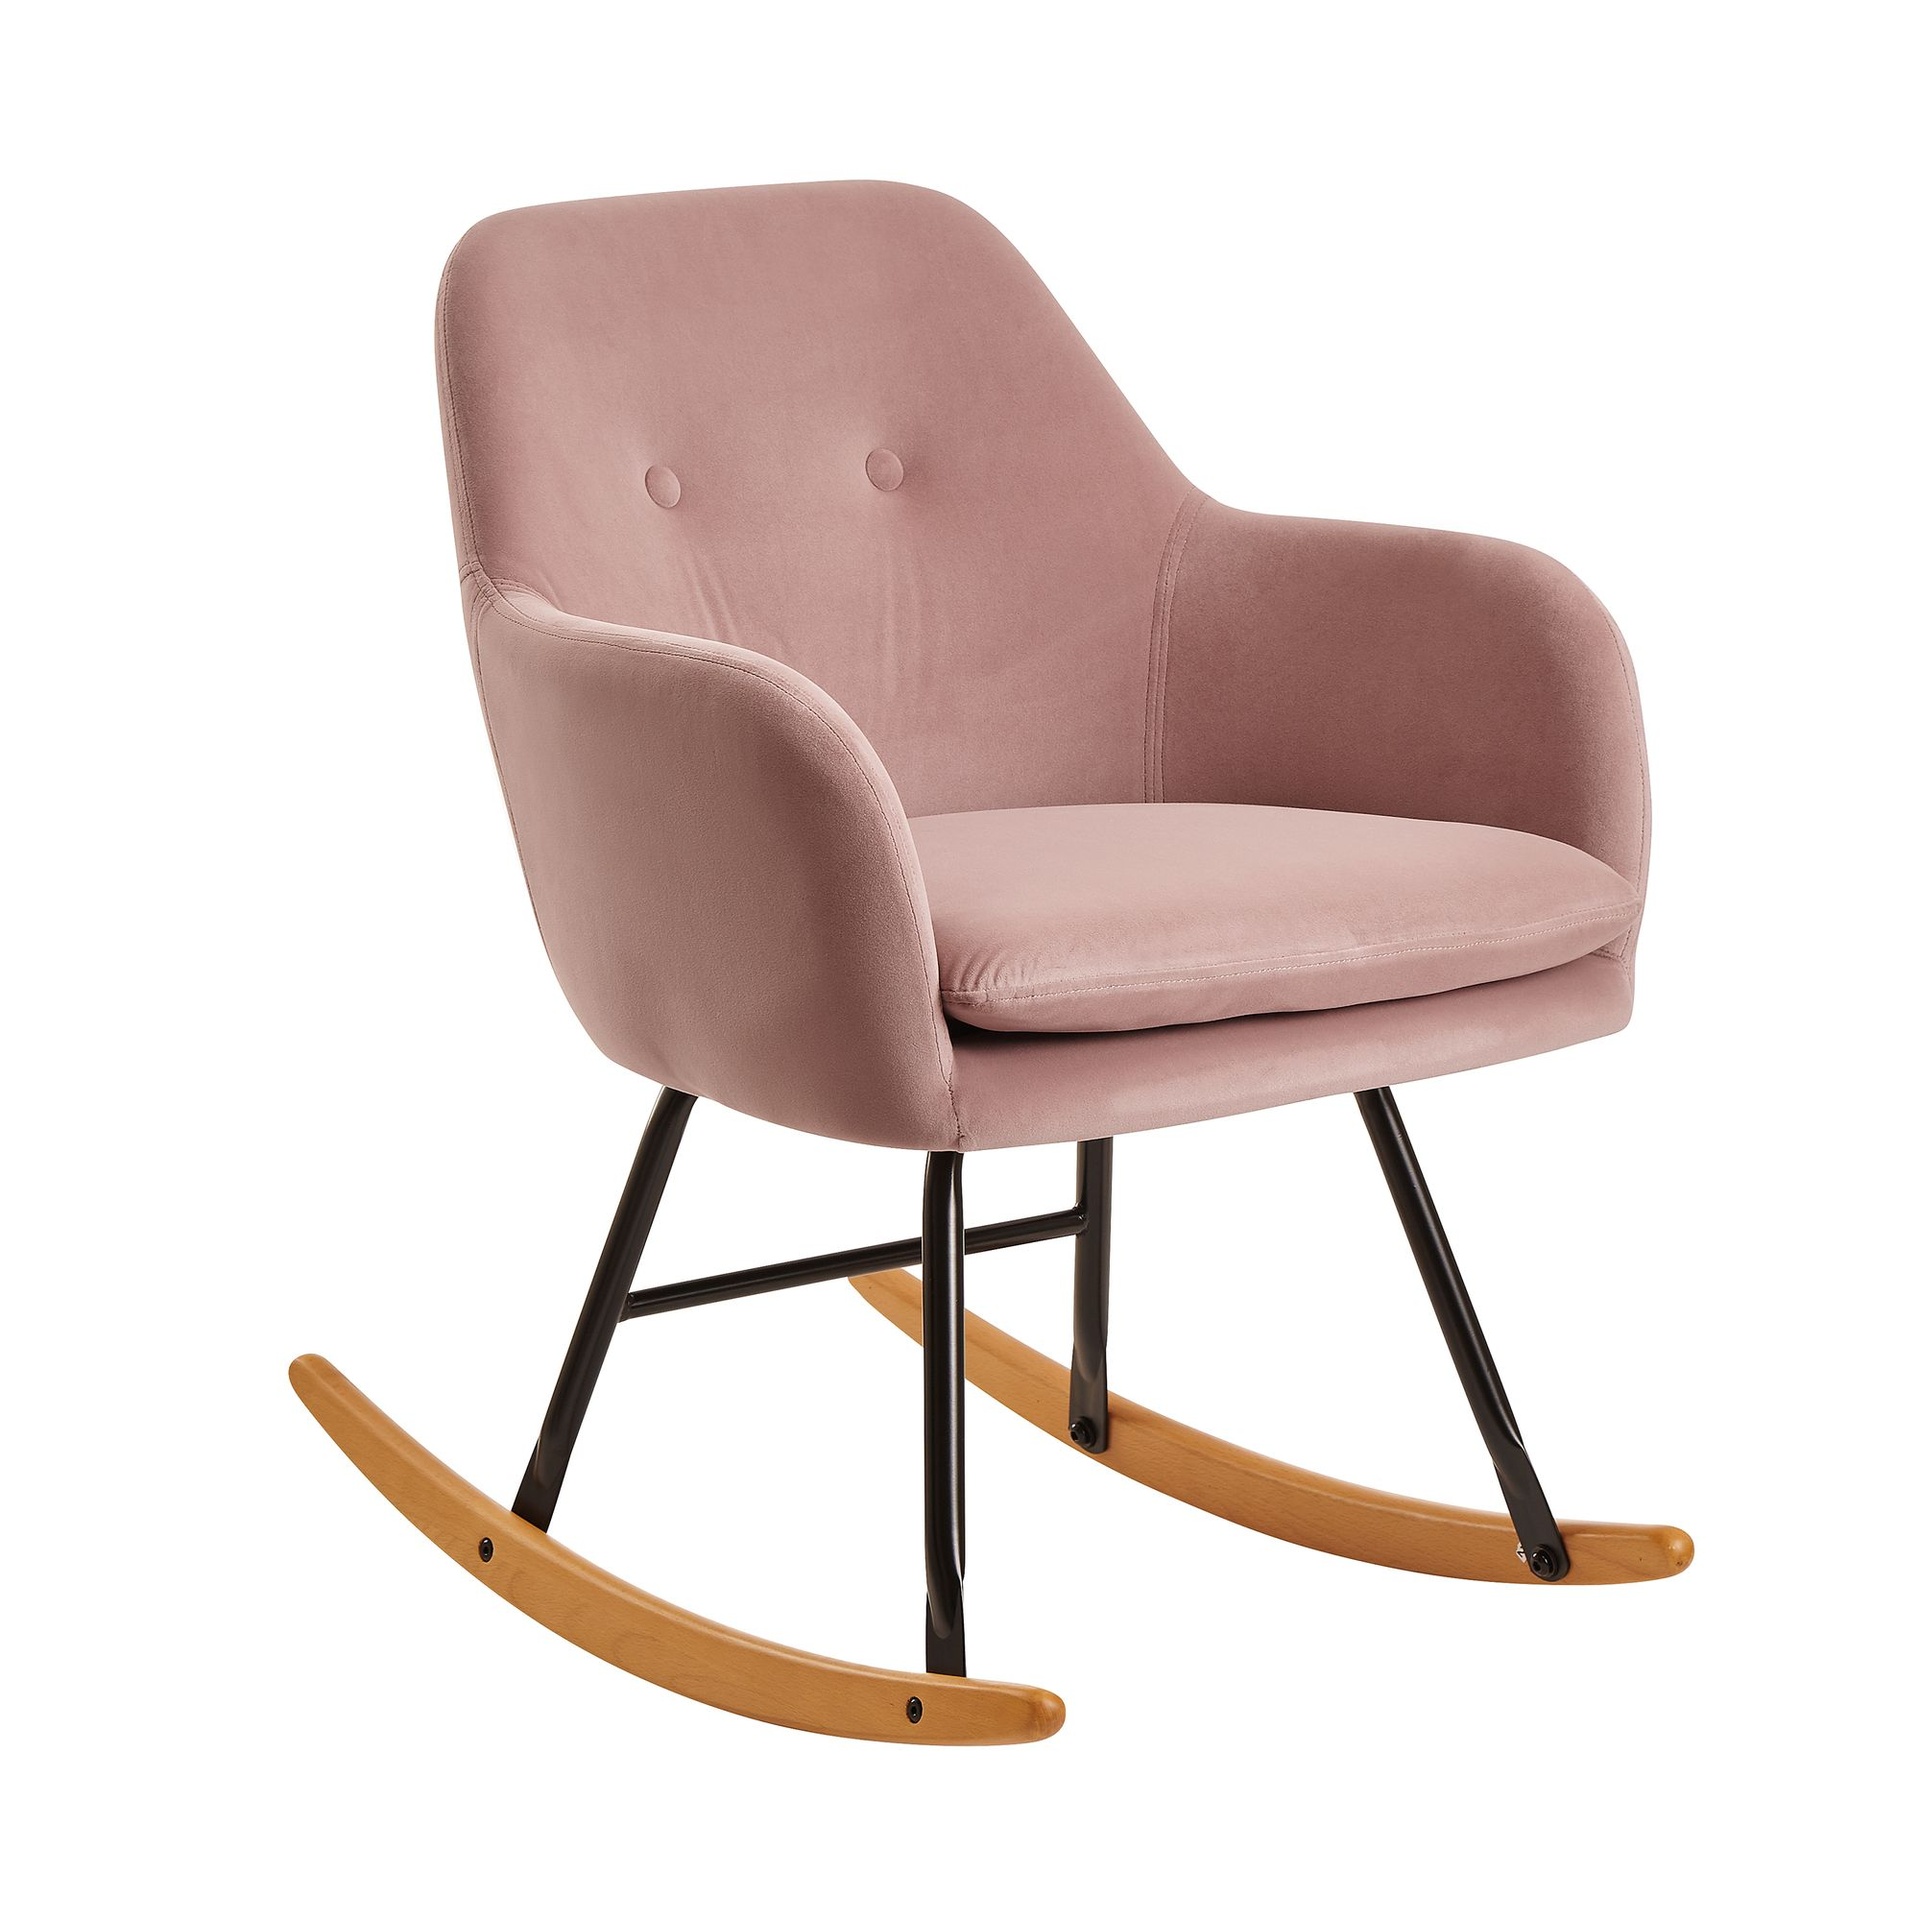 [A10060] Rocking chair rose 71x76x70cm design velours / bois